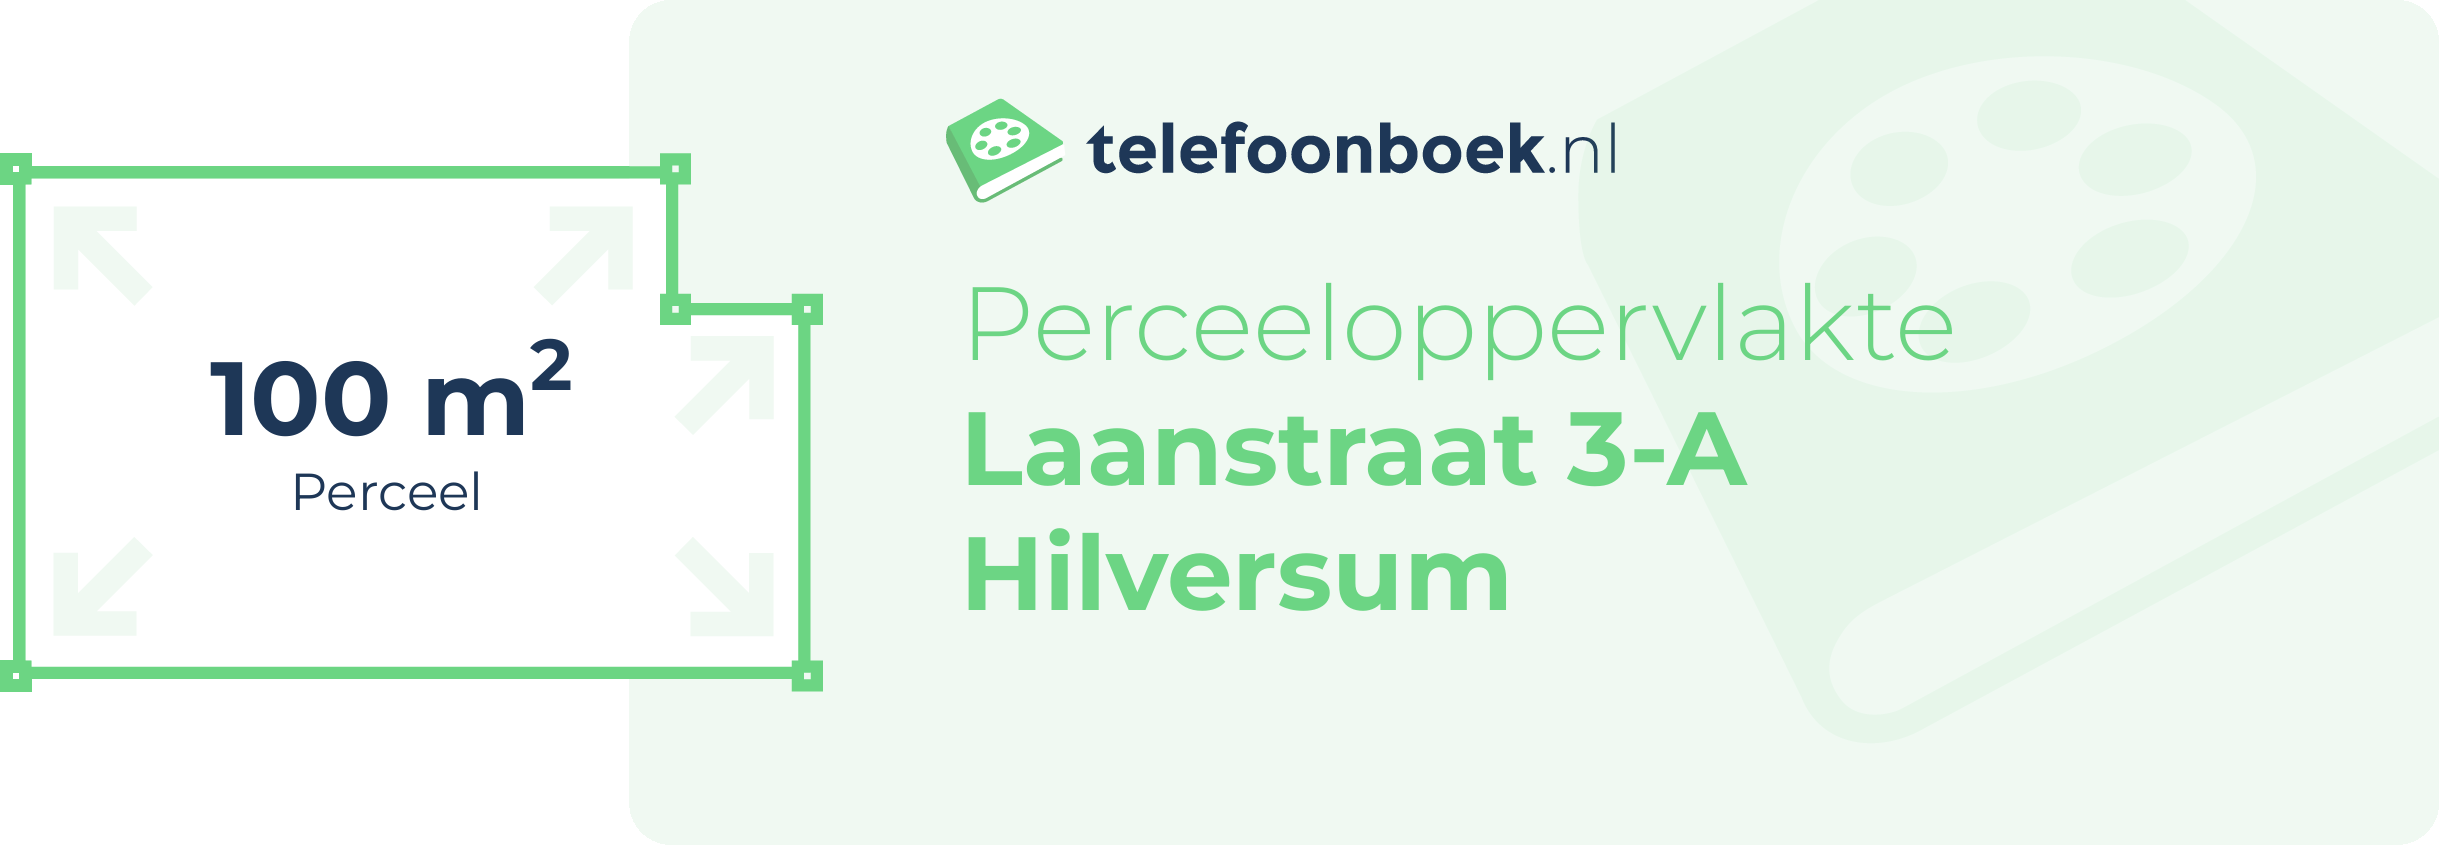 Perceeloppervlakte Laanstraat 3-A Hilversum